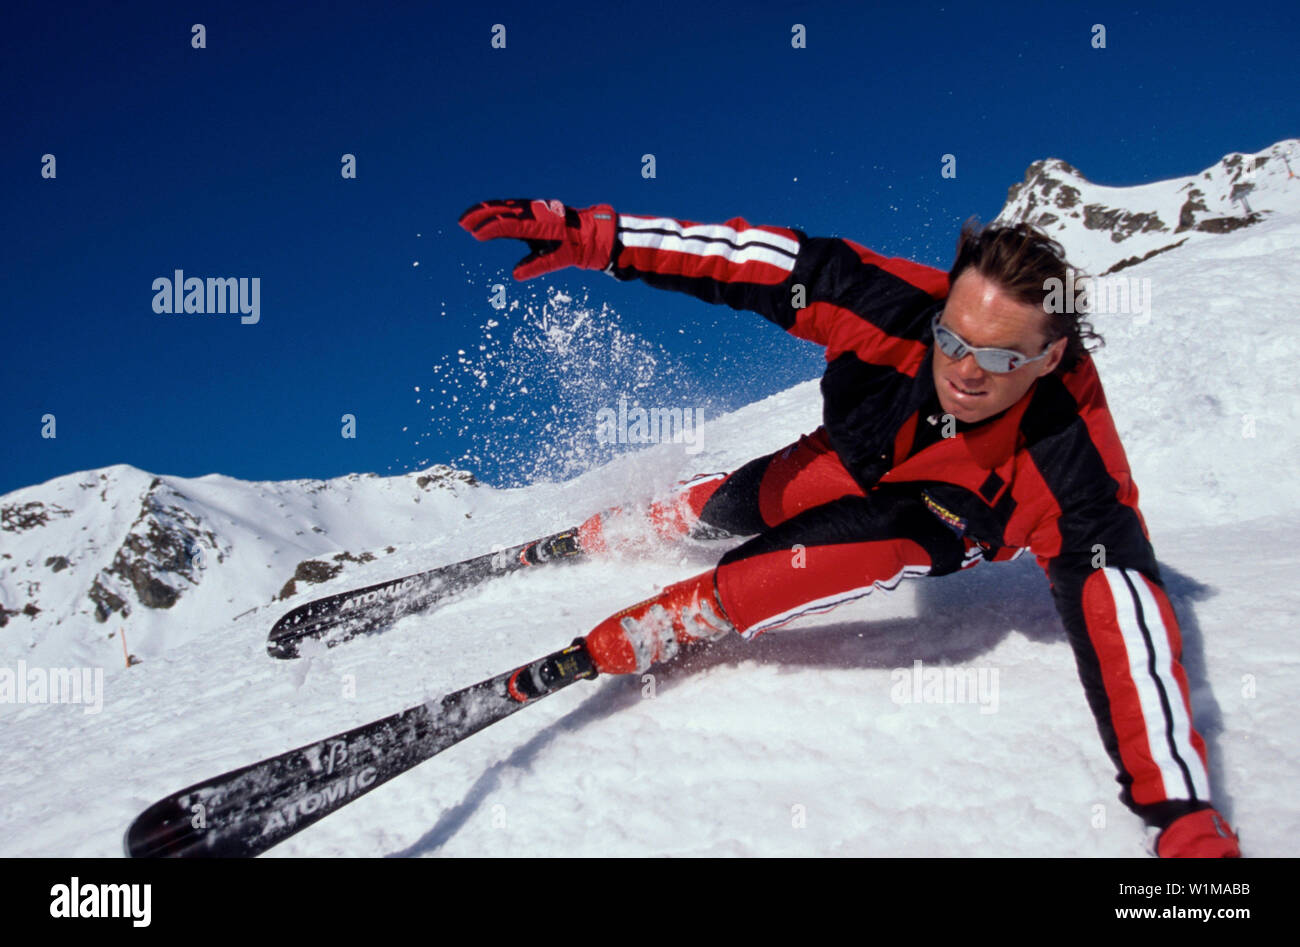 Ski, Carving extrem, Sports Stock Photo - Alamy